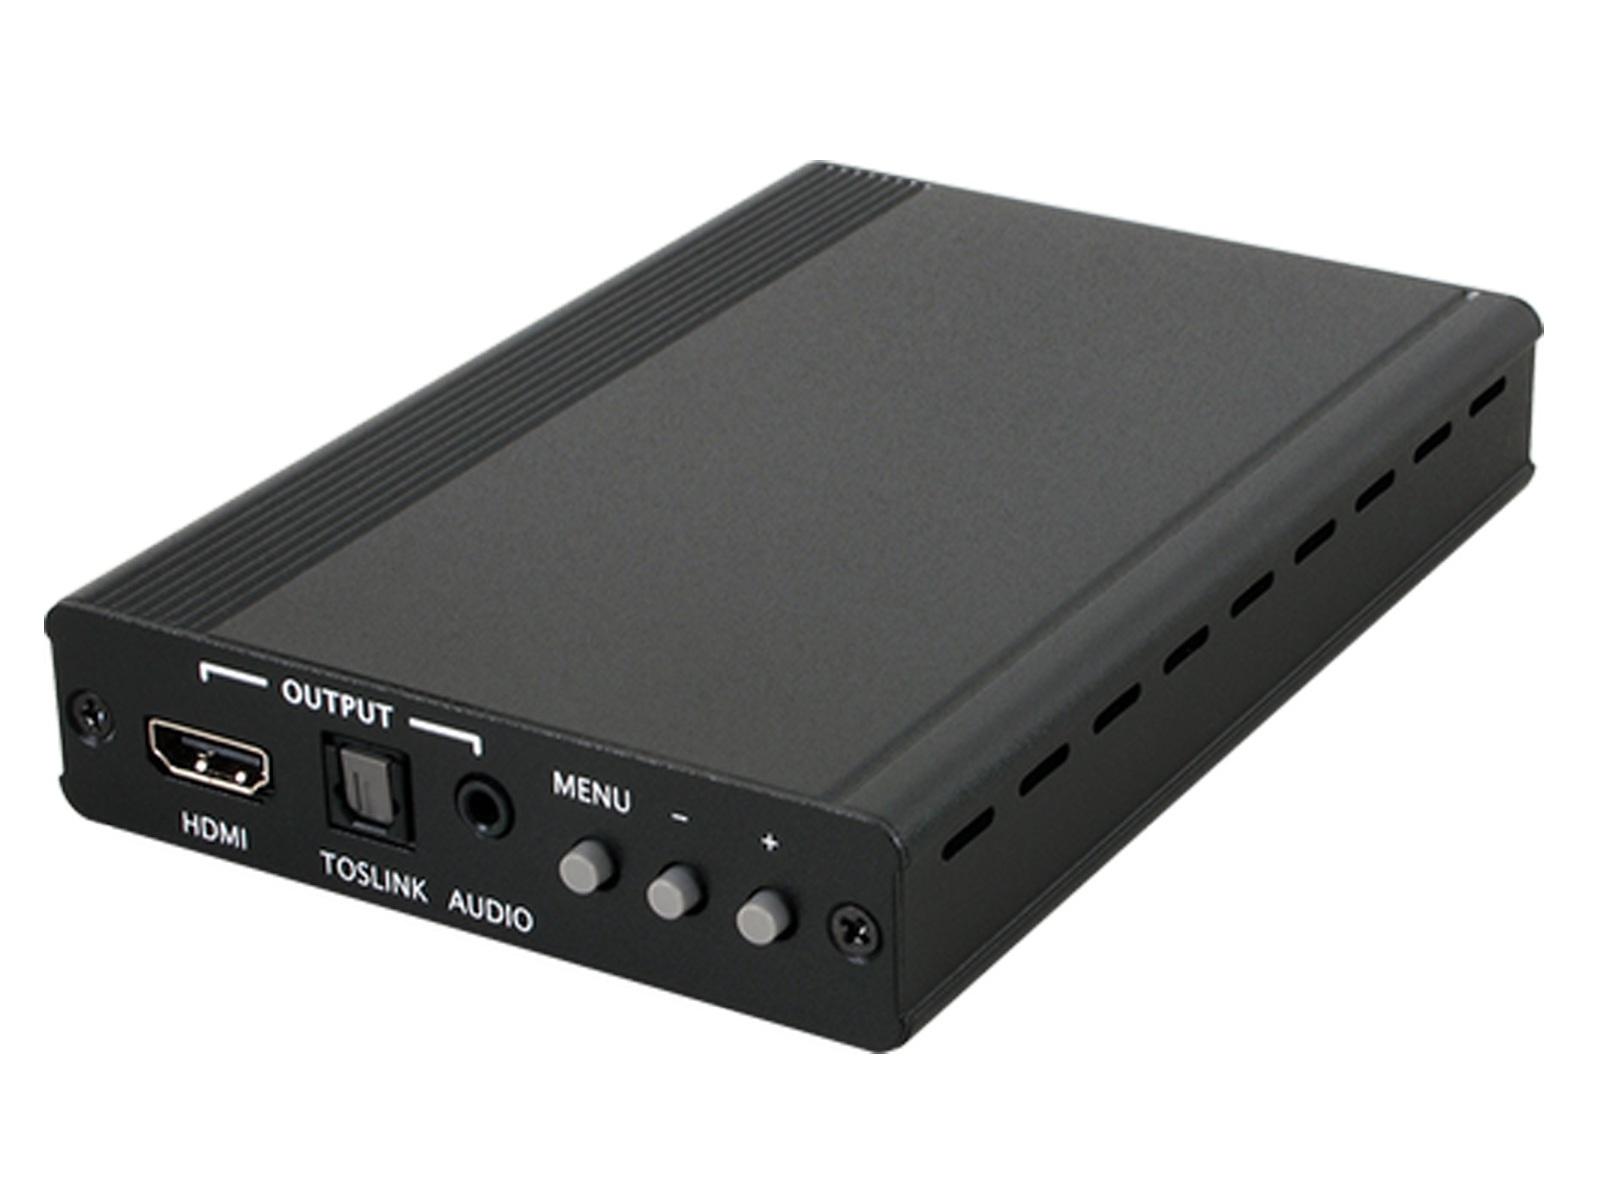 ANI-HPNHN HDMI (PAL/NTSC) to HDMI (PAL/NTSC) Standards Converter/Scaler by A-NeuVideo